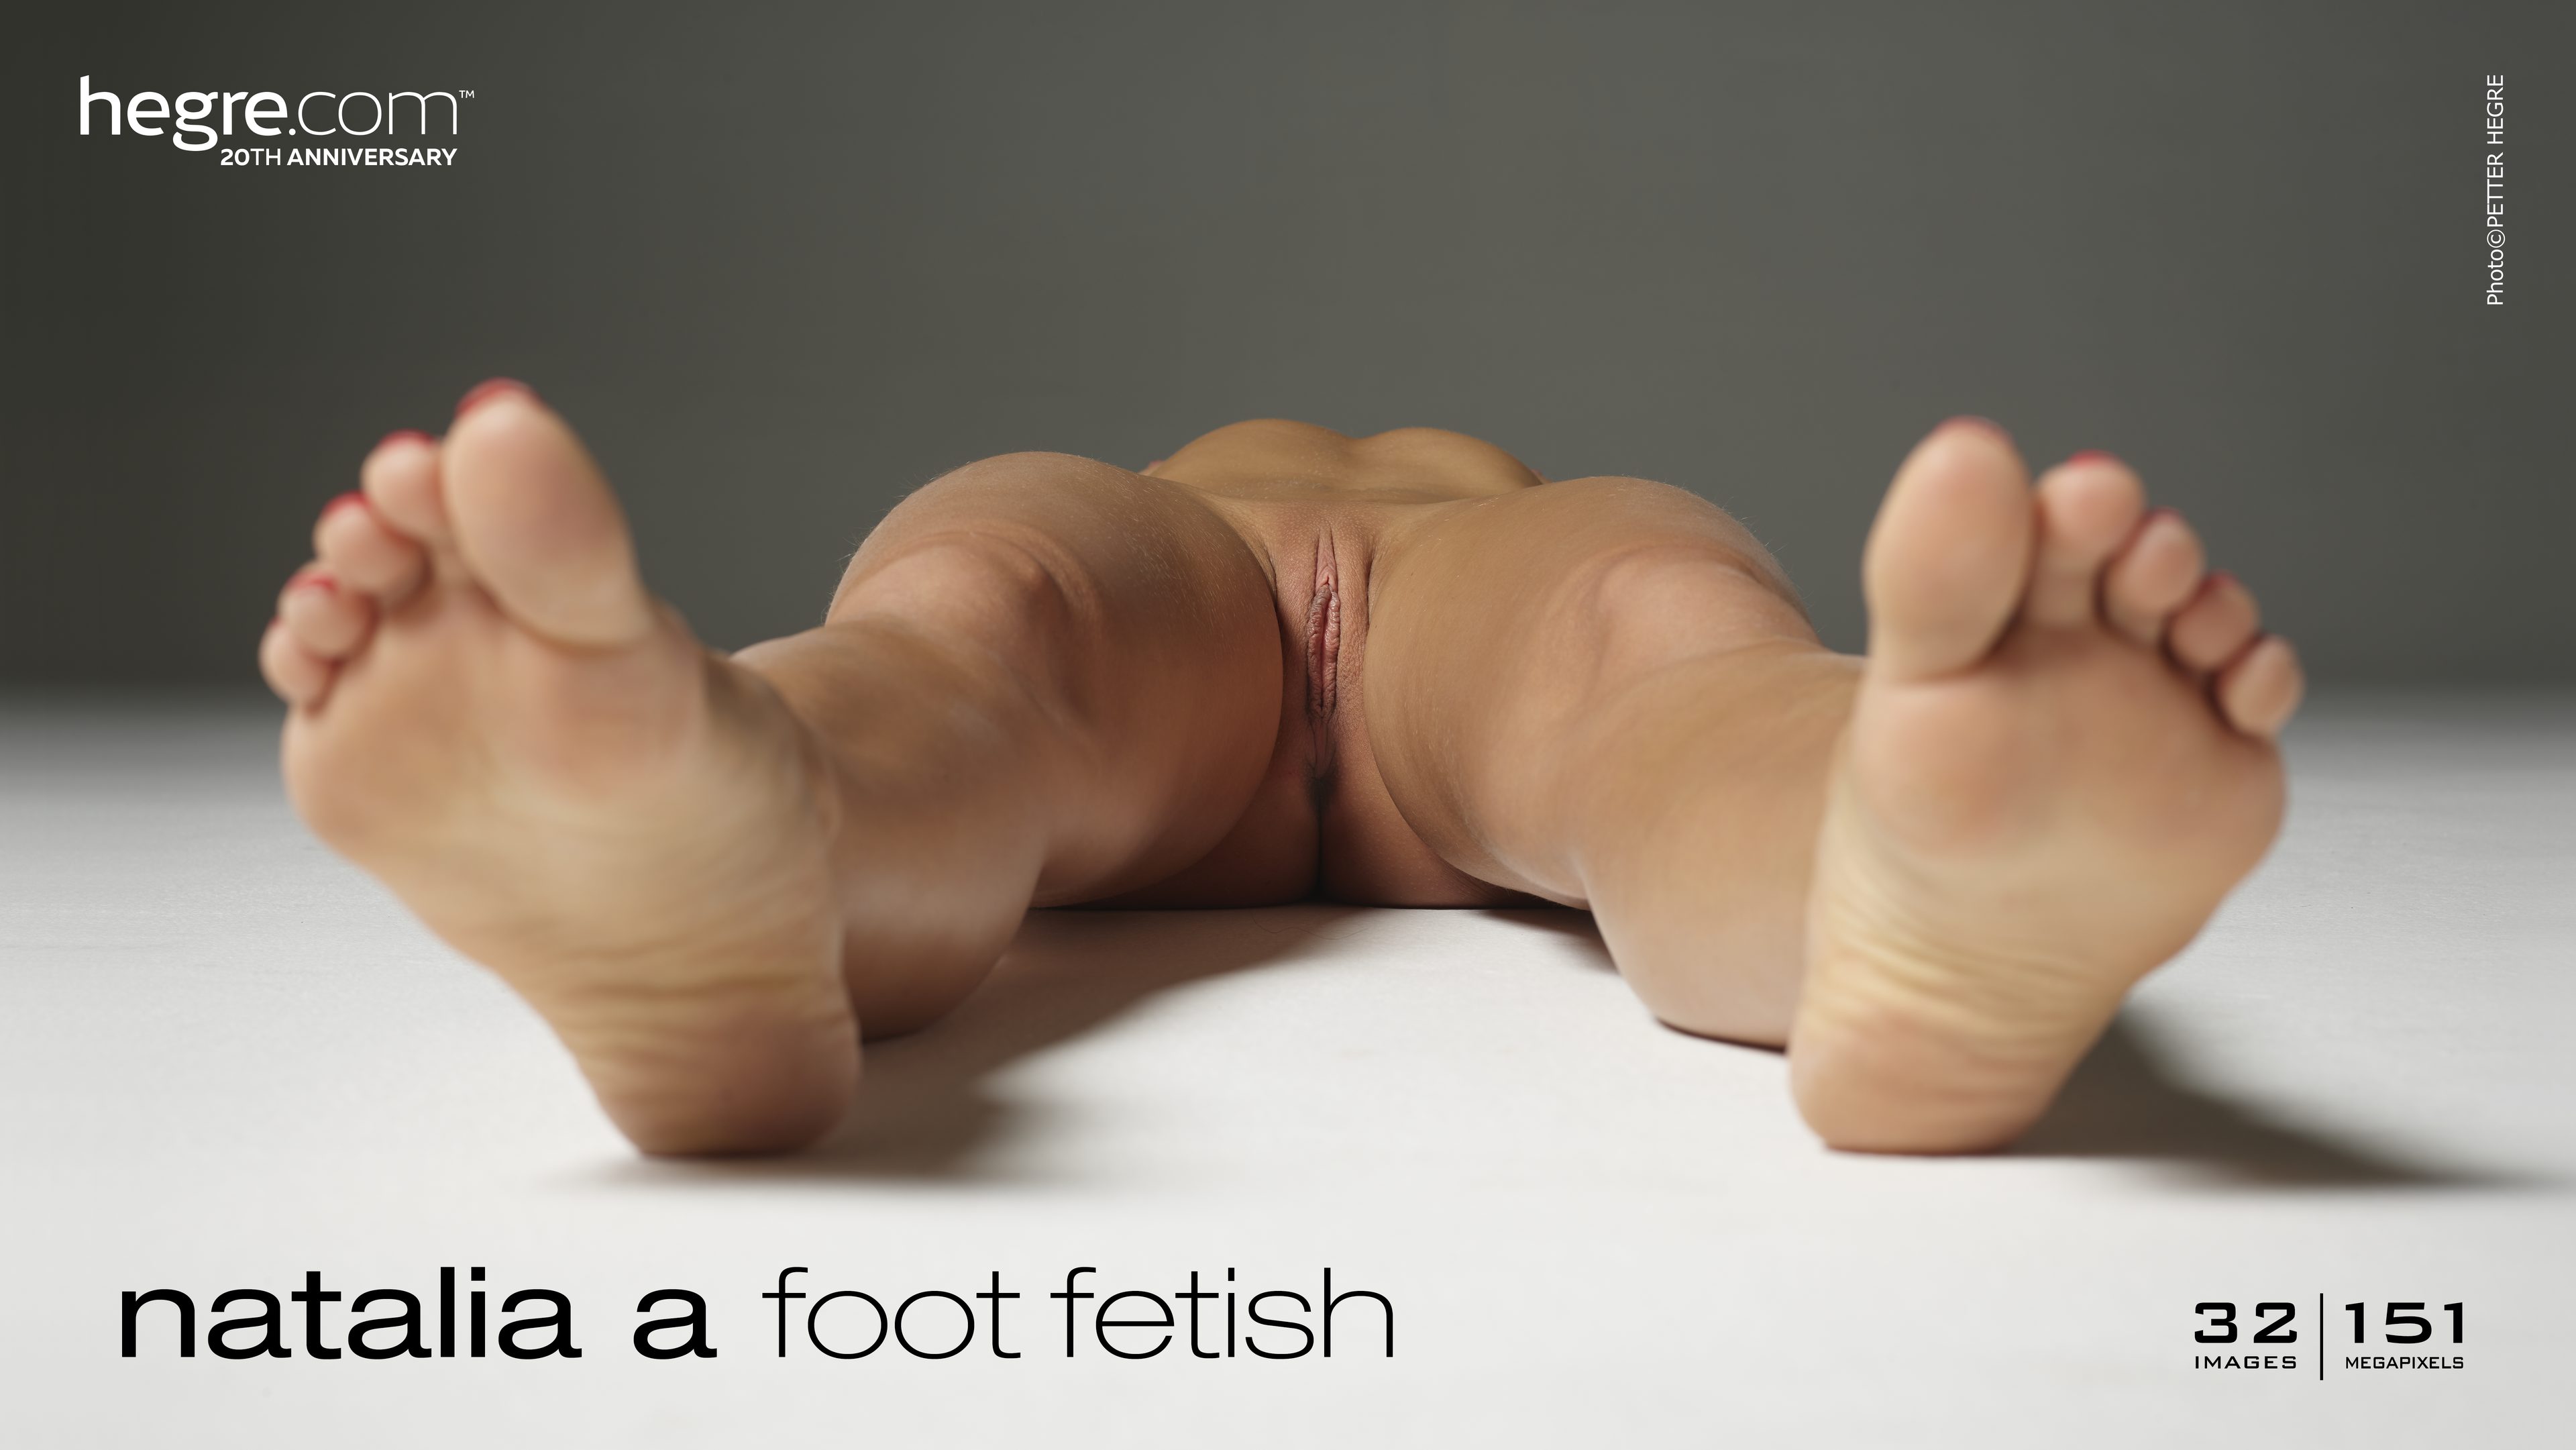 natalia-a-foot-fetish-board.jpg.